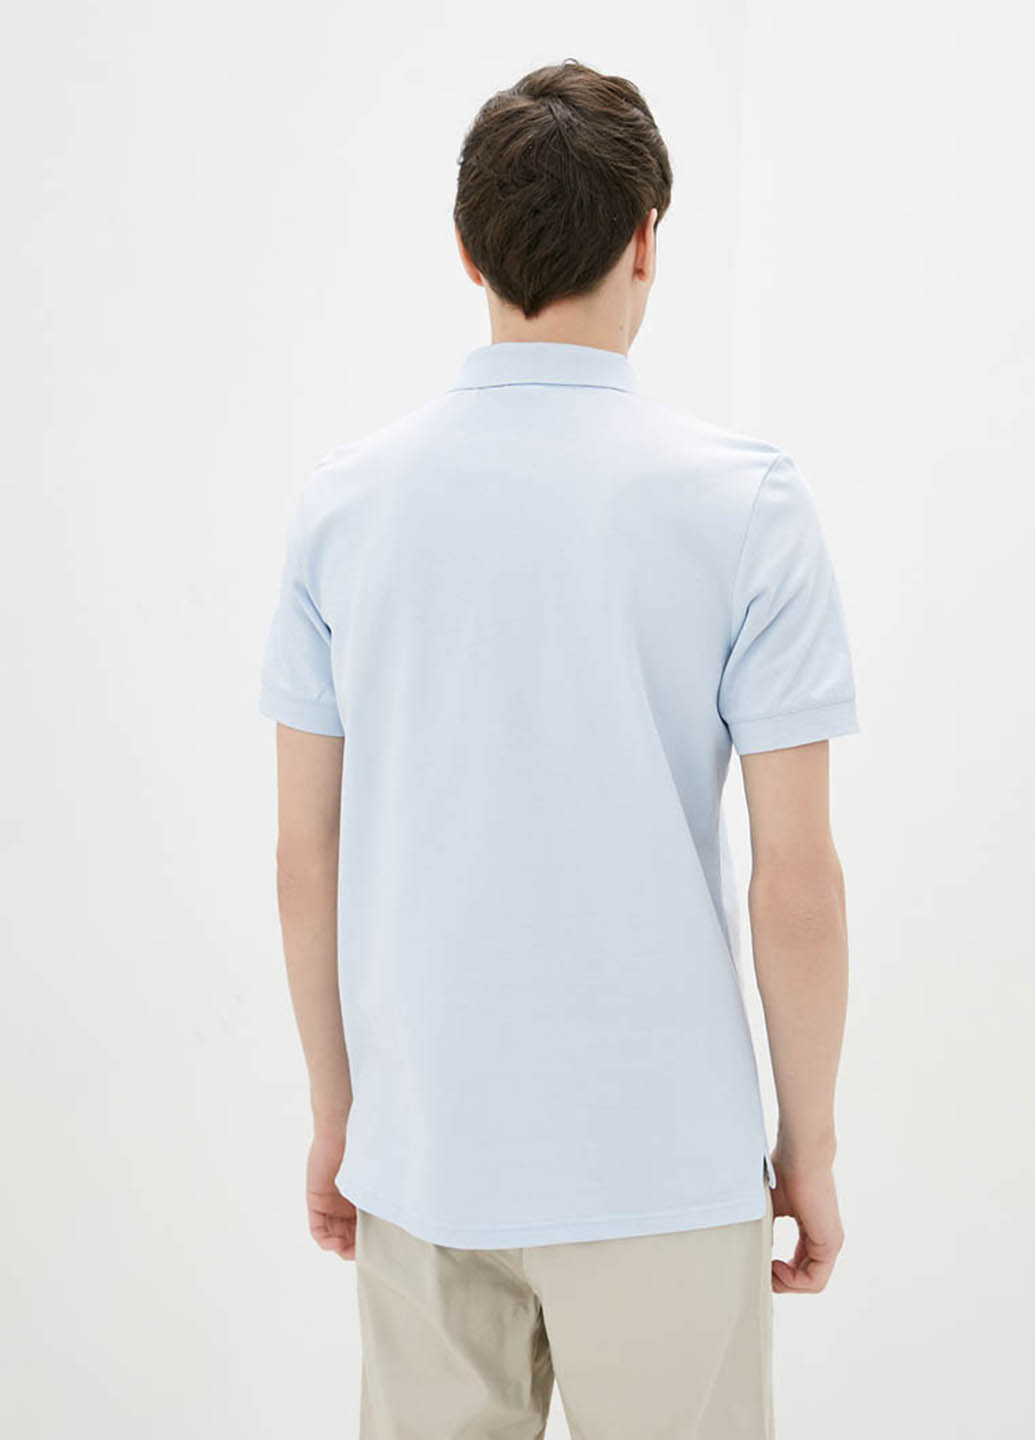 Светло-голубой футболка-поло для мужчин Promin однотонная